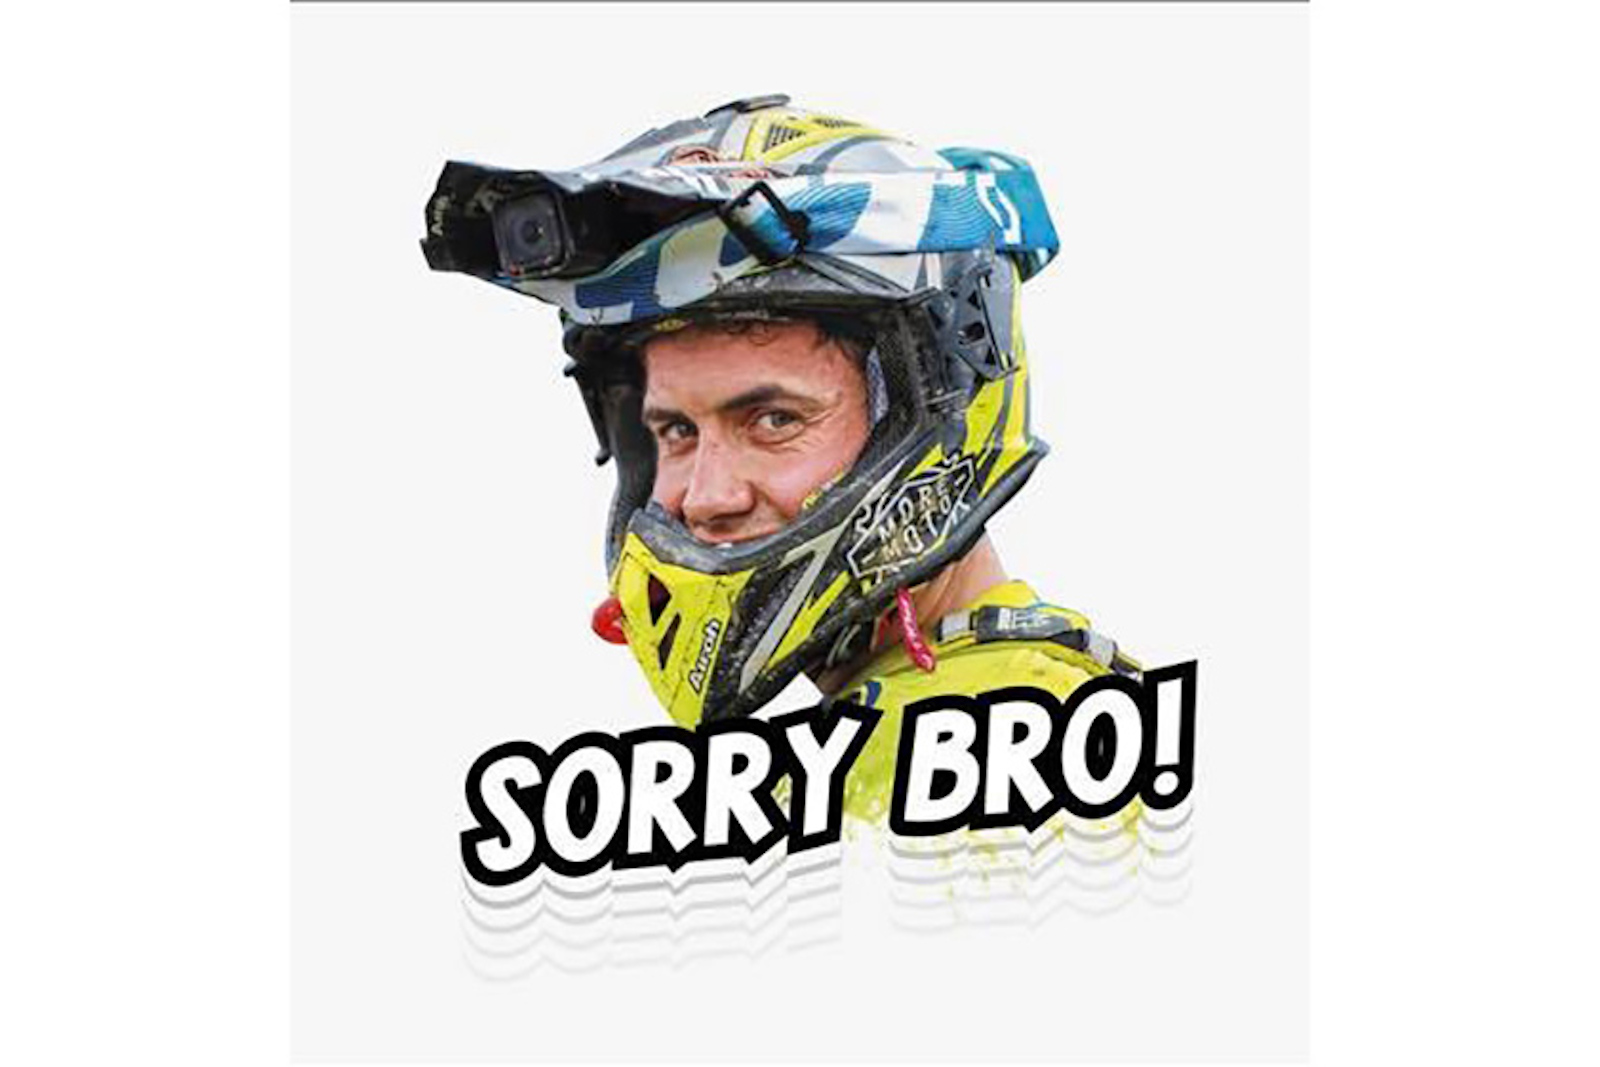 Mario Roman – “Sorry Bro!” Romaniacs tribute t-shirts